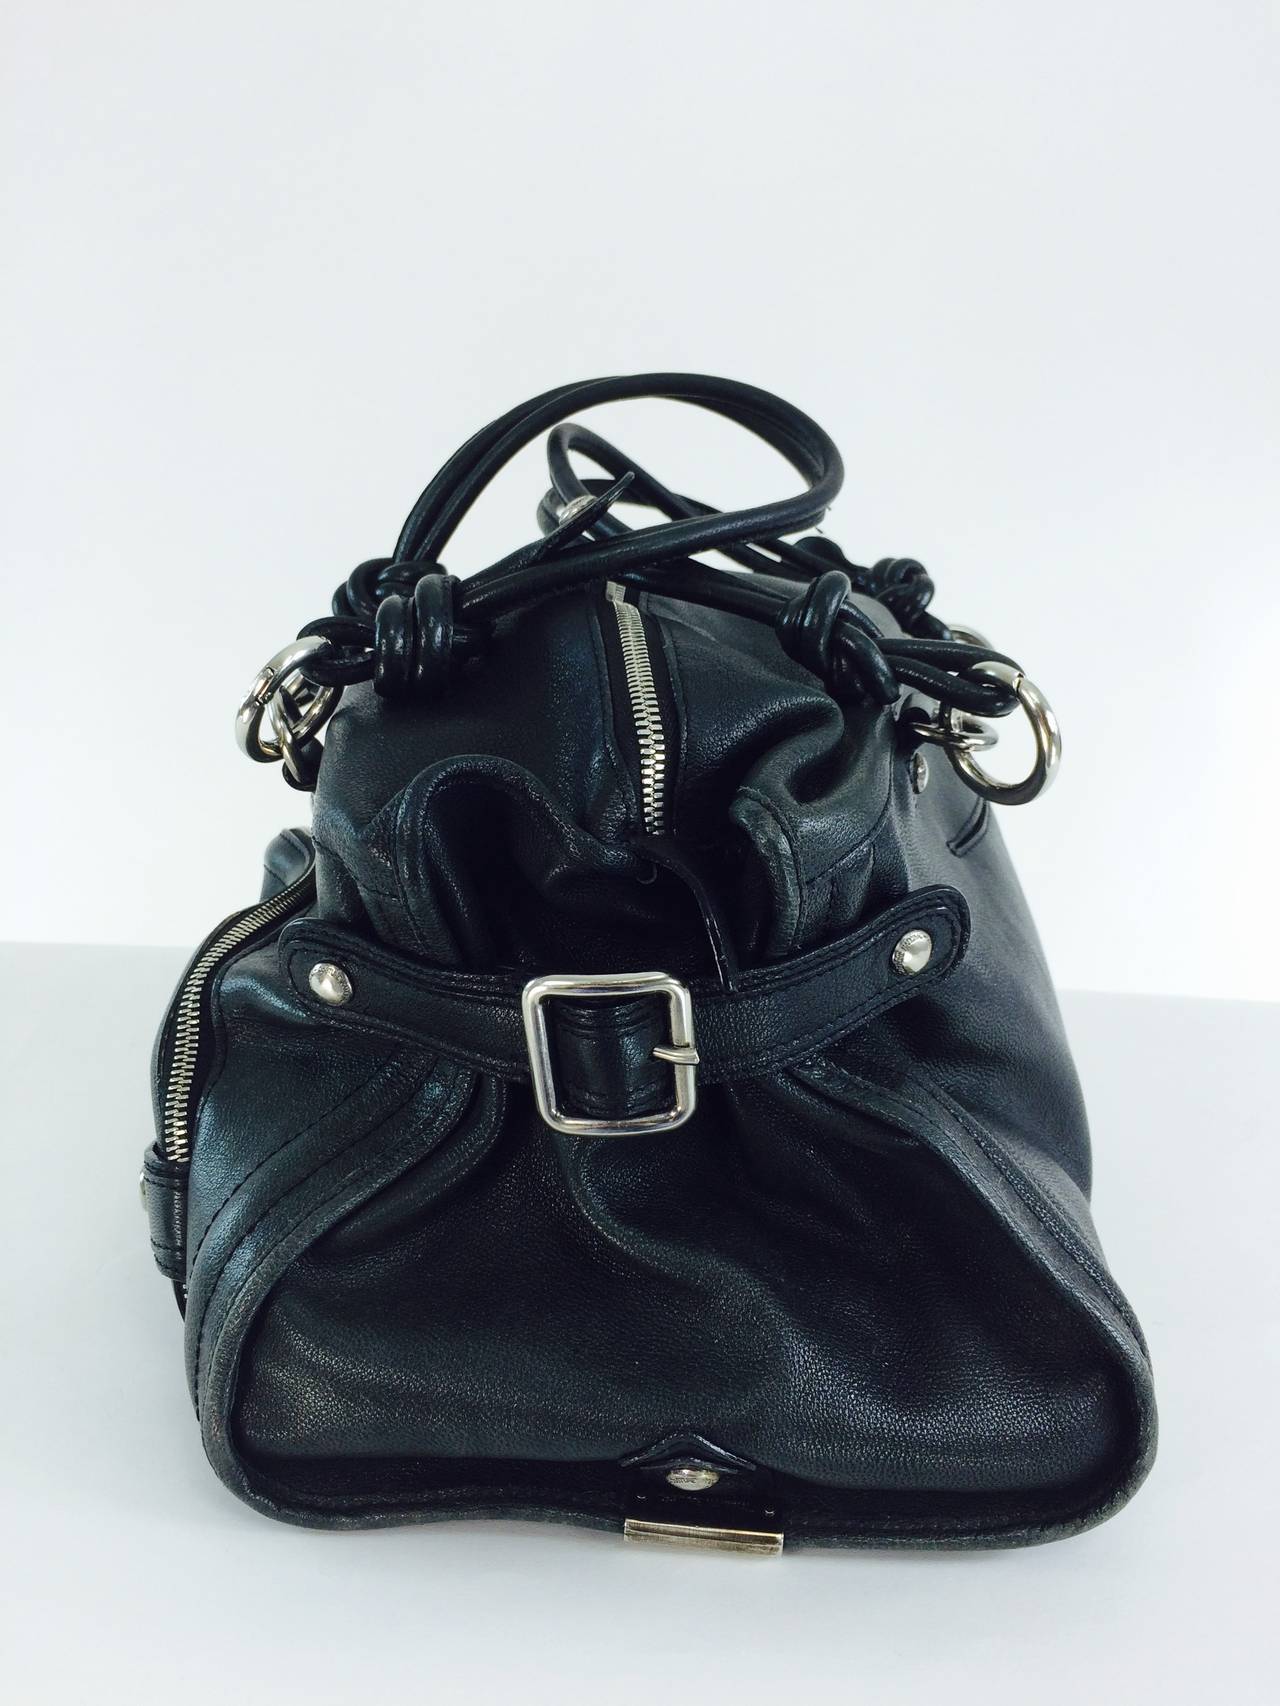 Costume National black leather double handle satchel handbag For Sale at 1stdibs